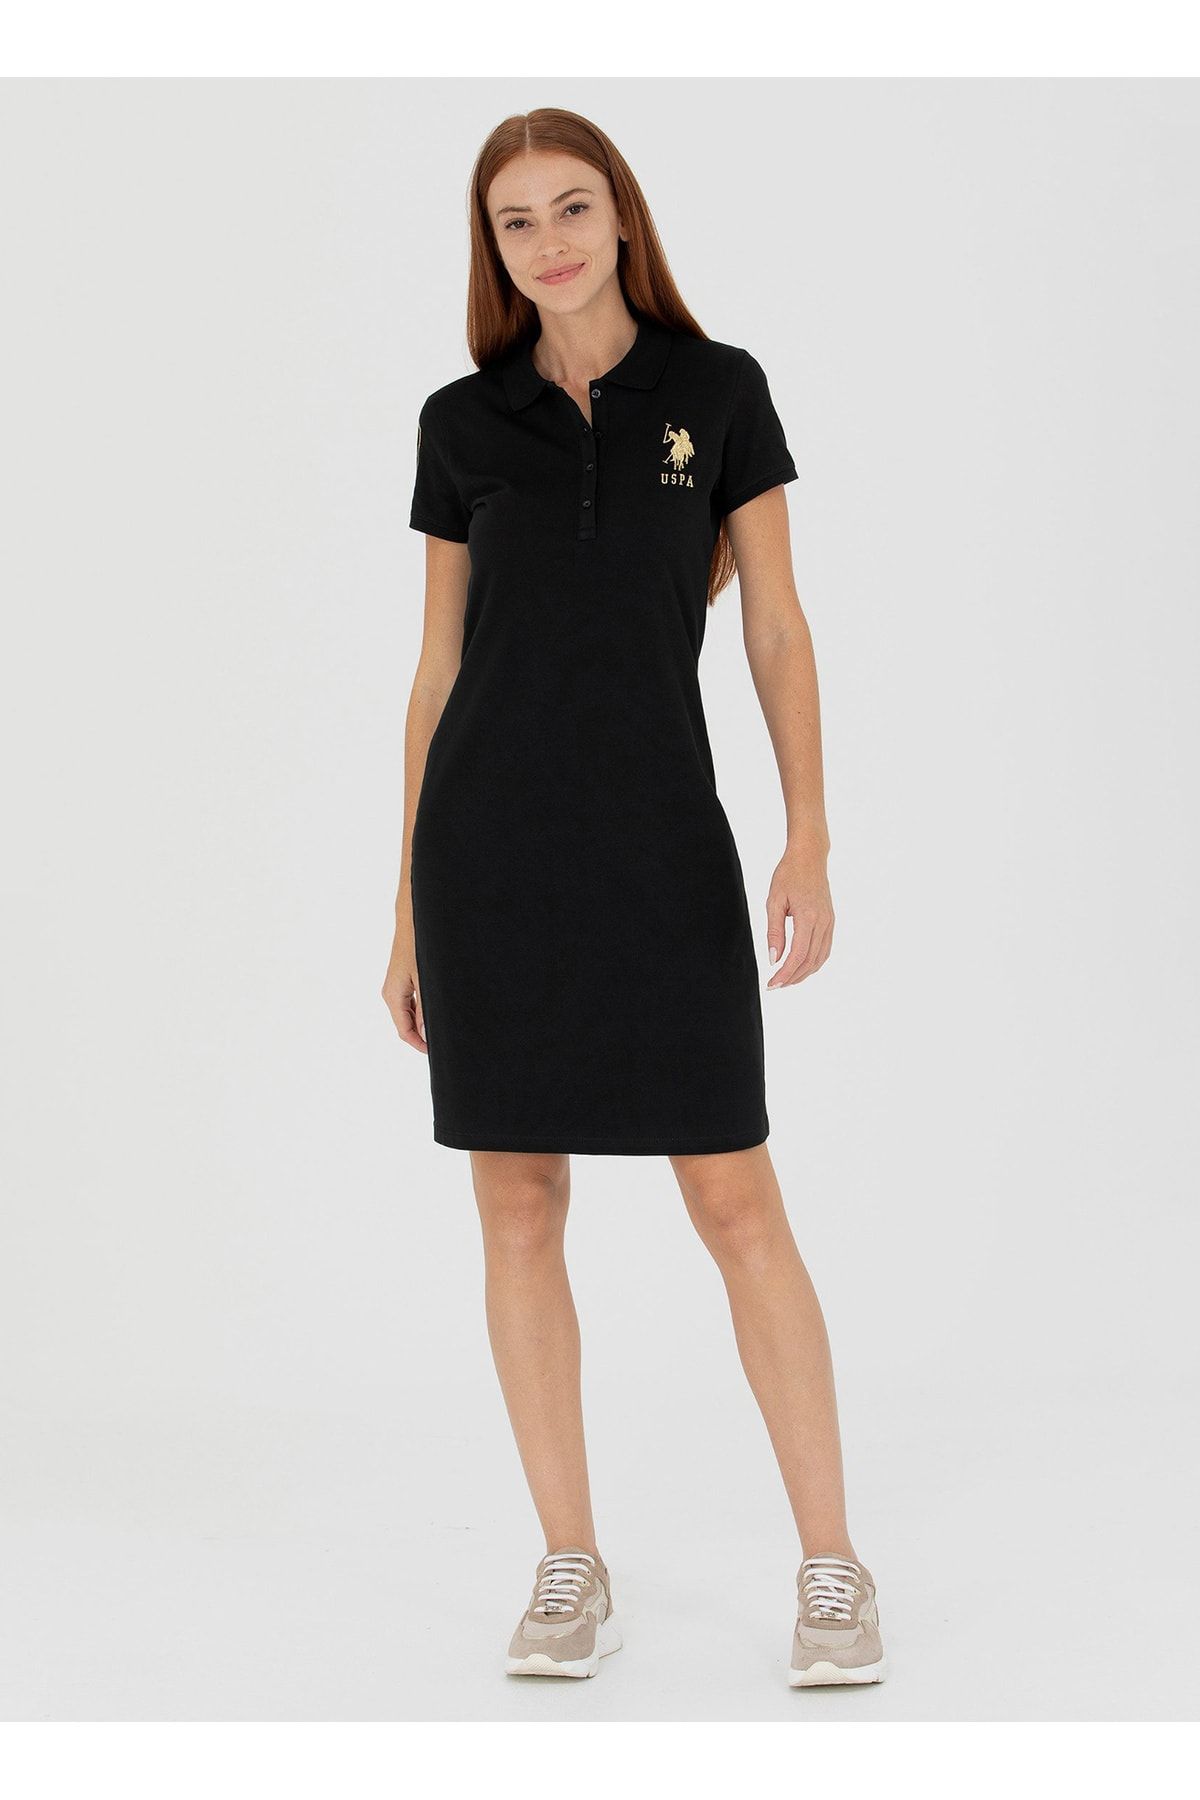 U.S. Polo Assn. U.S. Polo Assn. Polo Yaka Düz Siyah Diz Üstü Kadın Elbise MTS02223-075